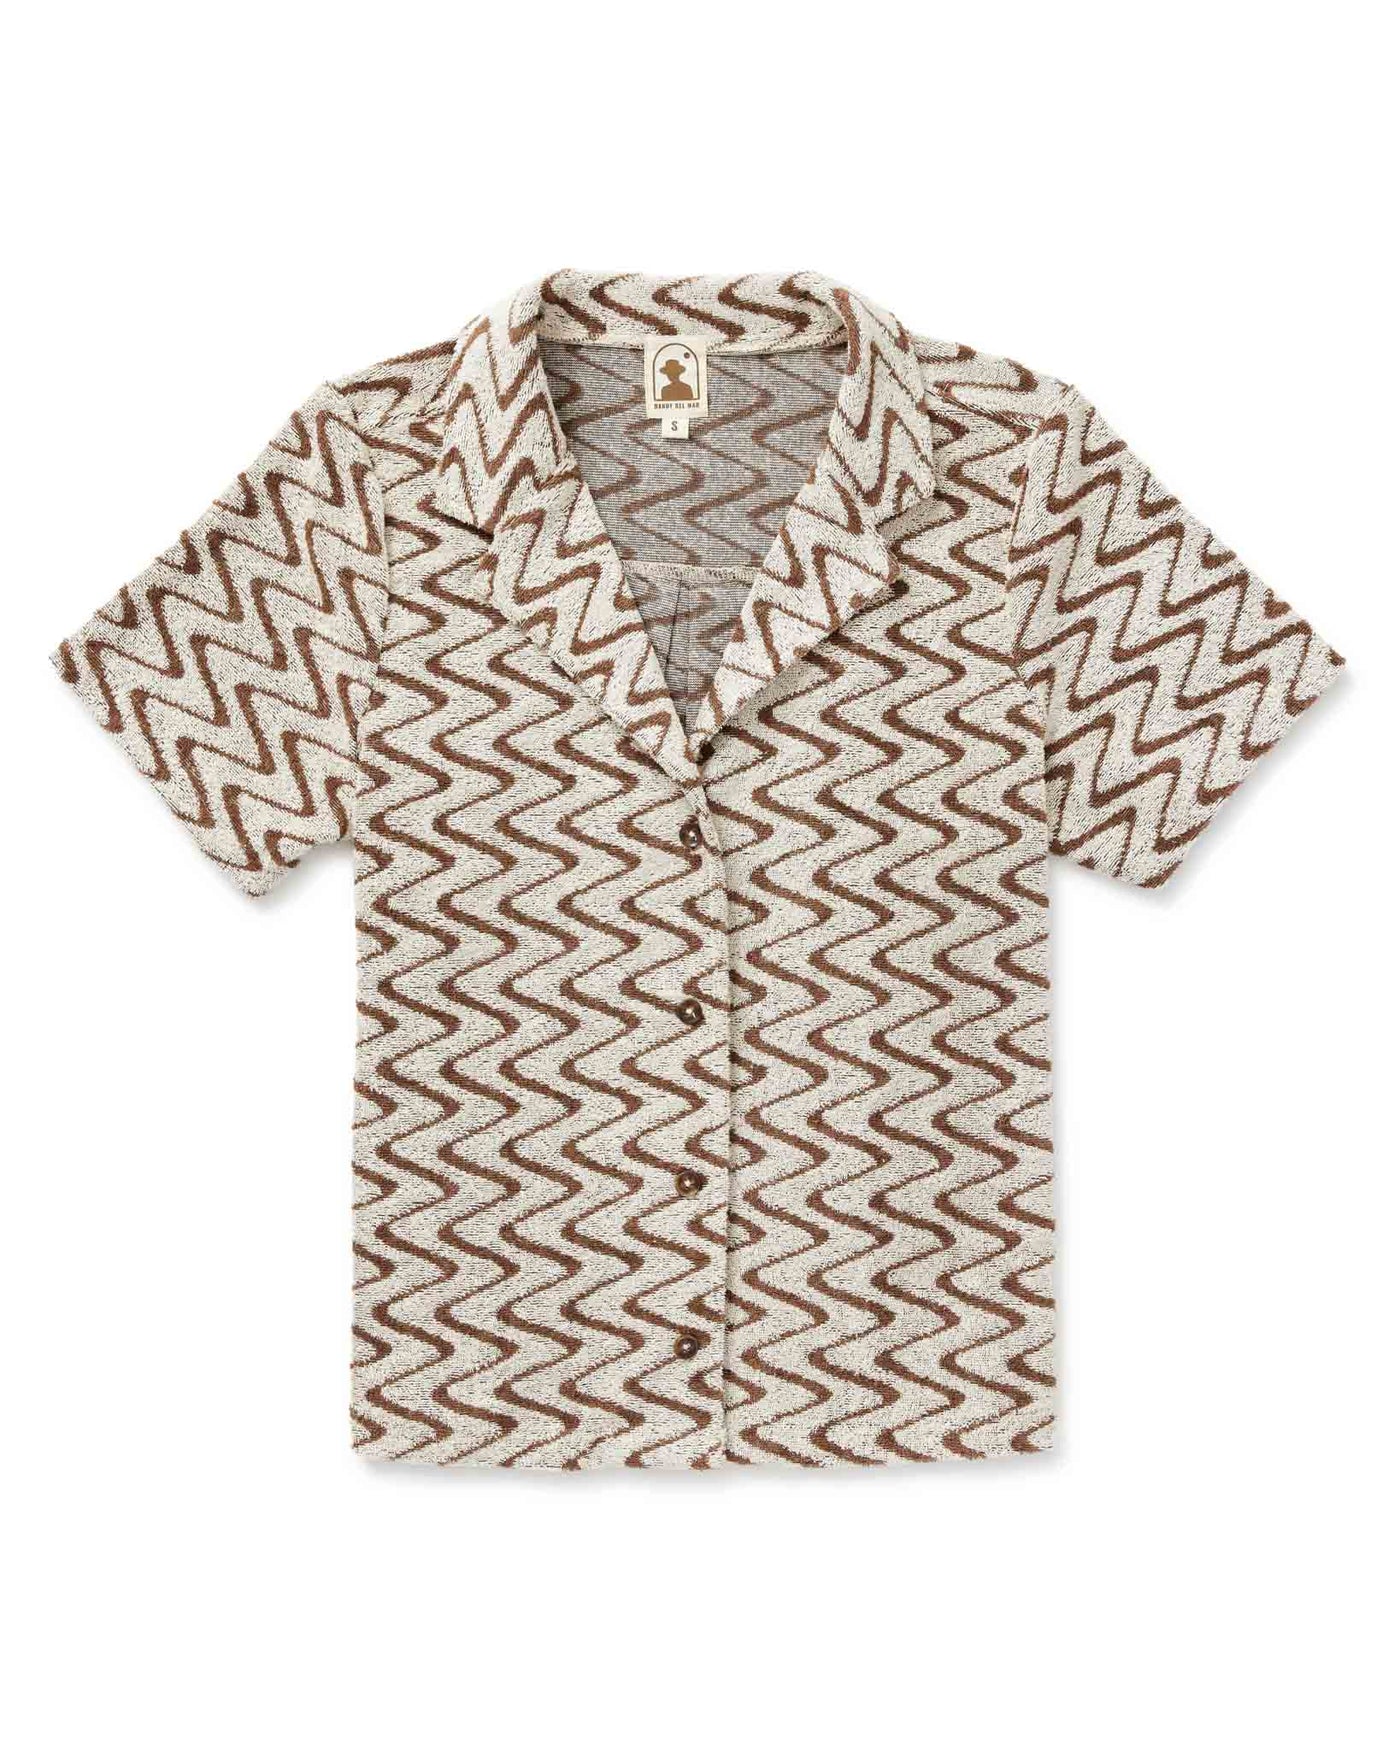 The Santorini Shirt - Cortado Groove Stripe